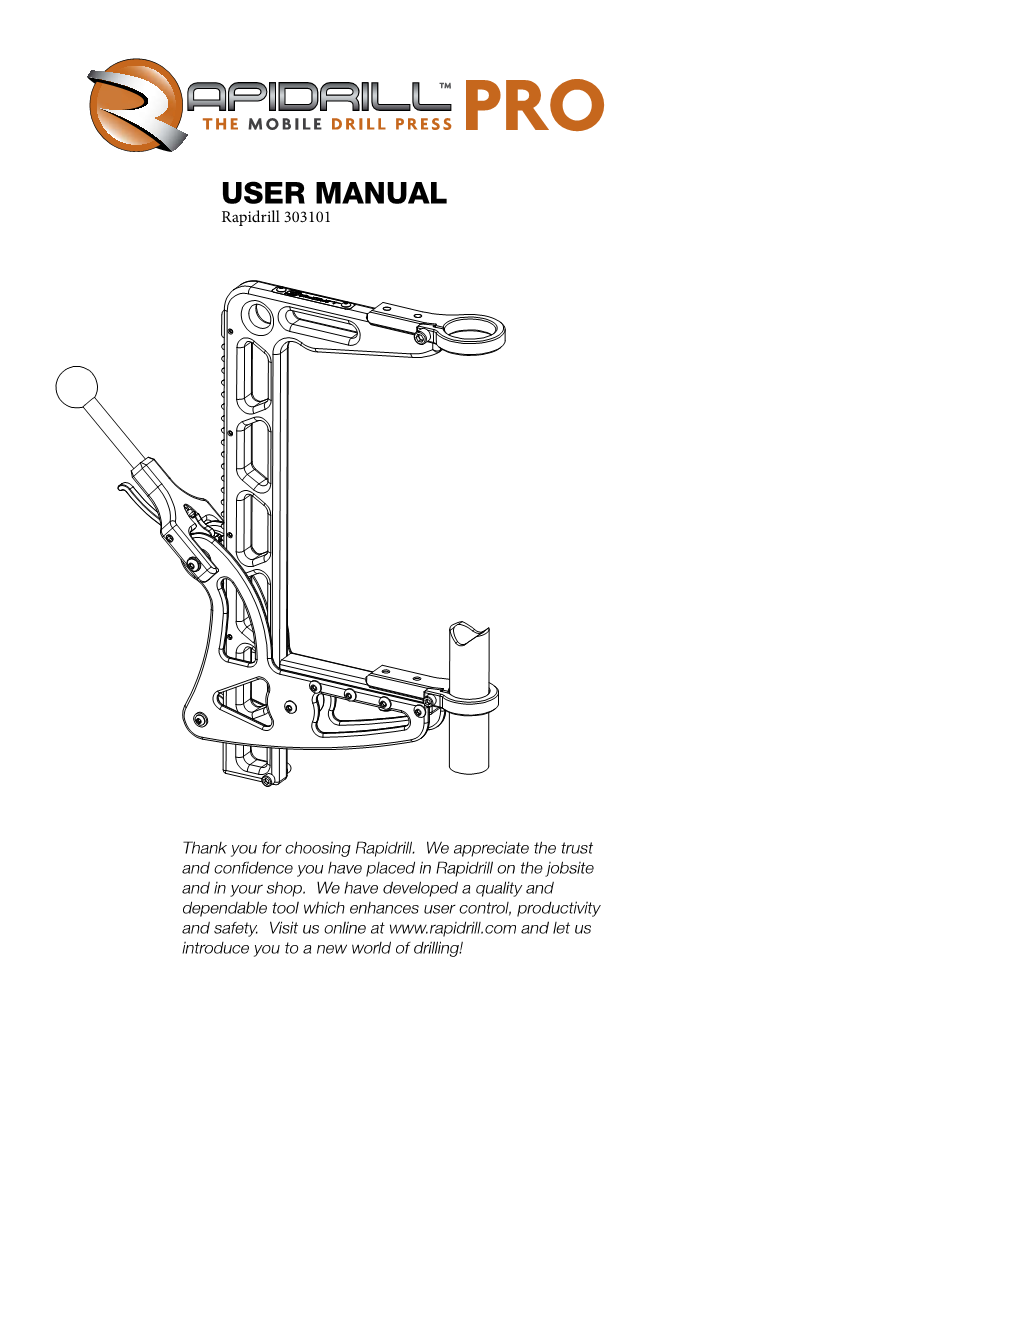 Rapidrill User Manual